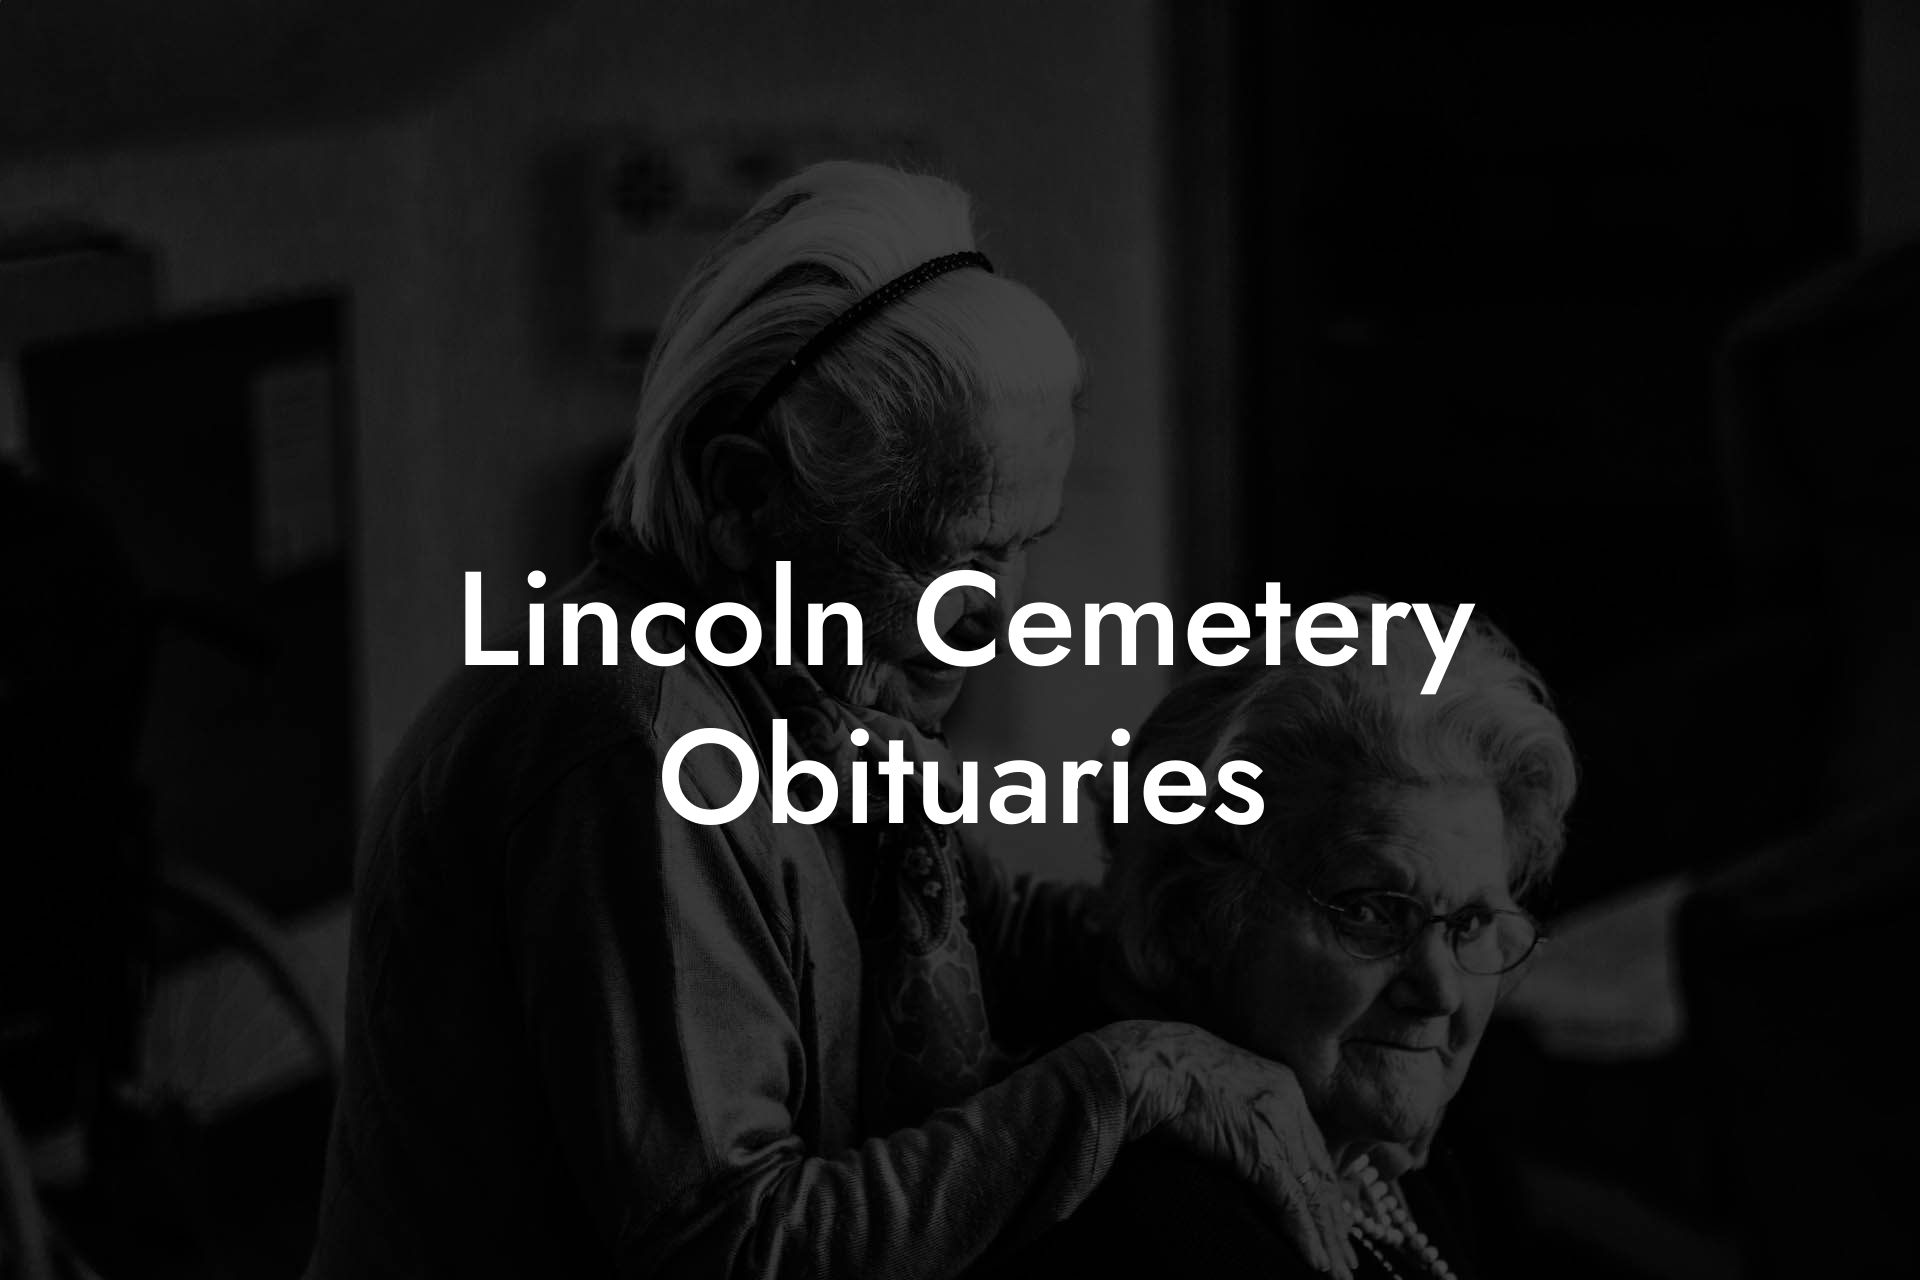 Lincoln Cemetery Obituaries